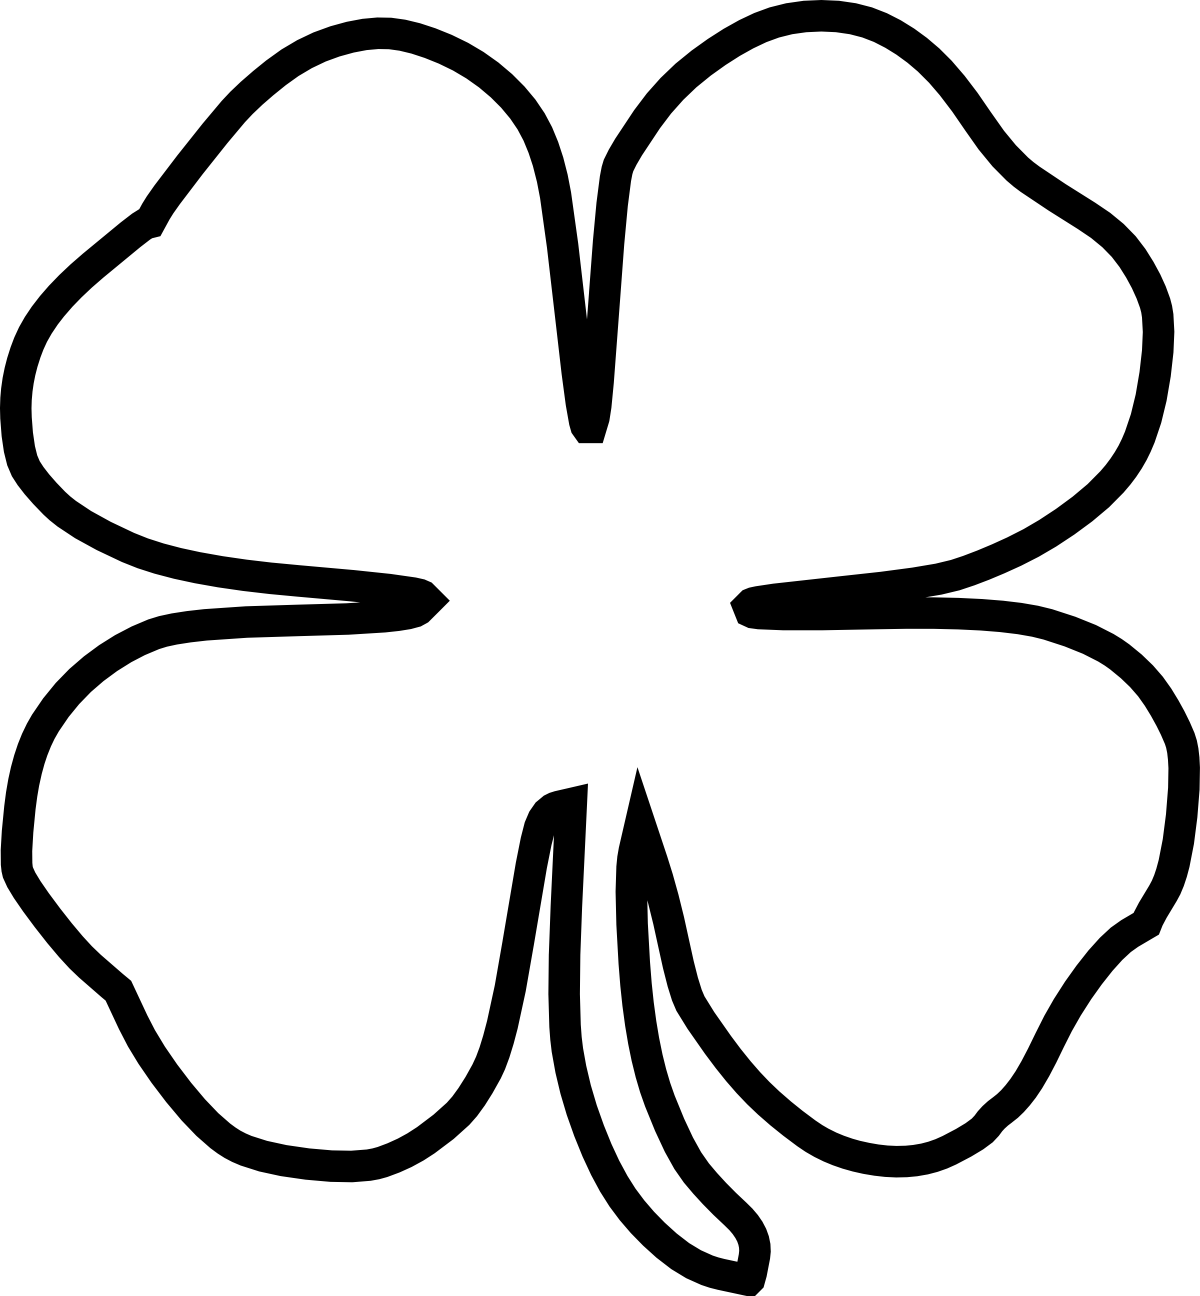 4-leaf-clover-clipart-of-shamrocks-and-four-leaf-clovers-3-clip-art